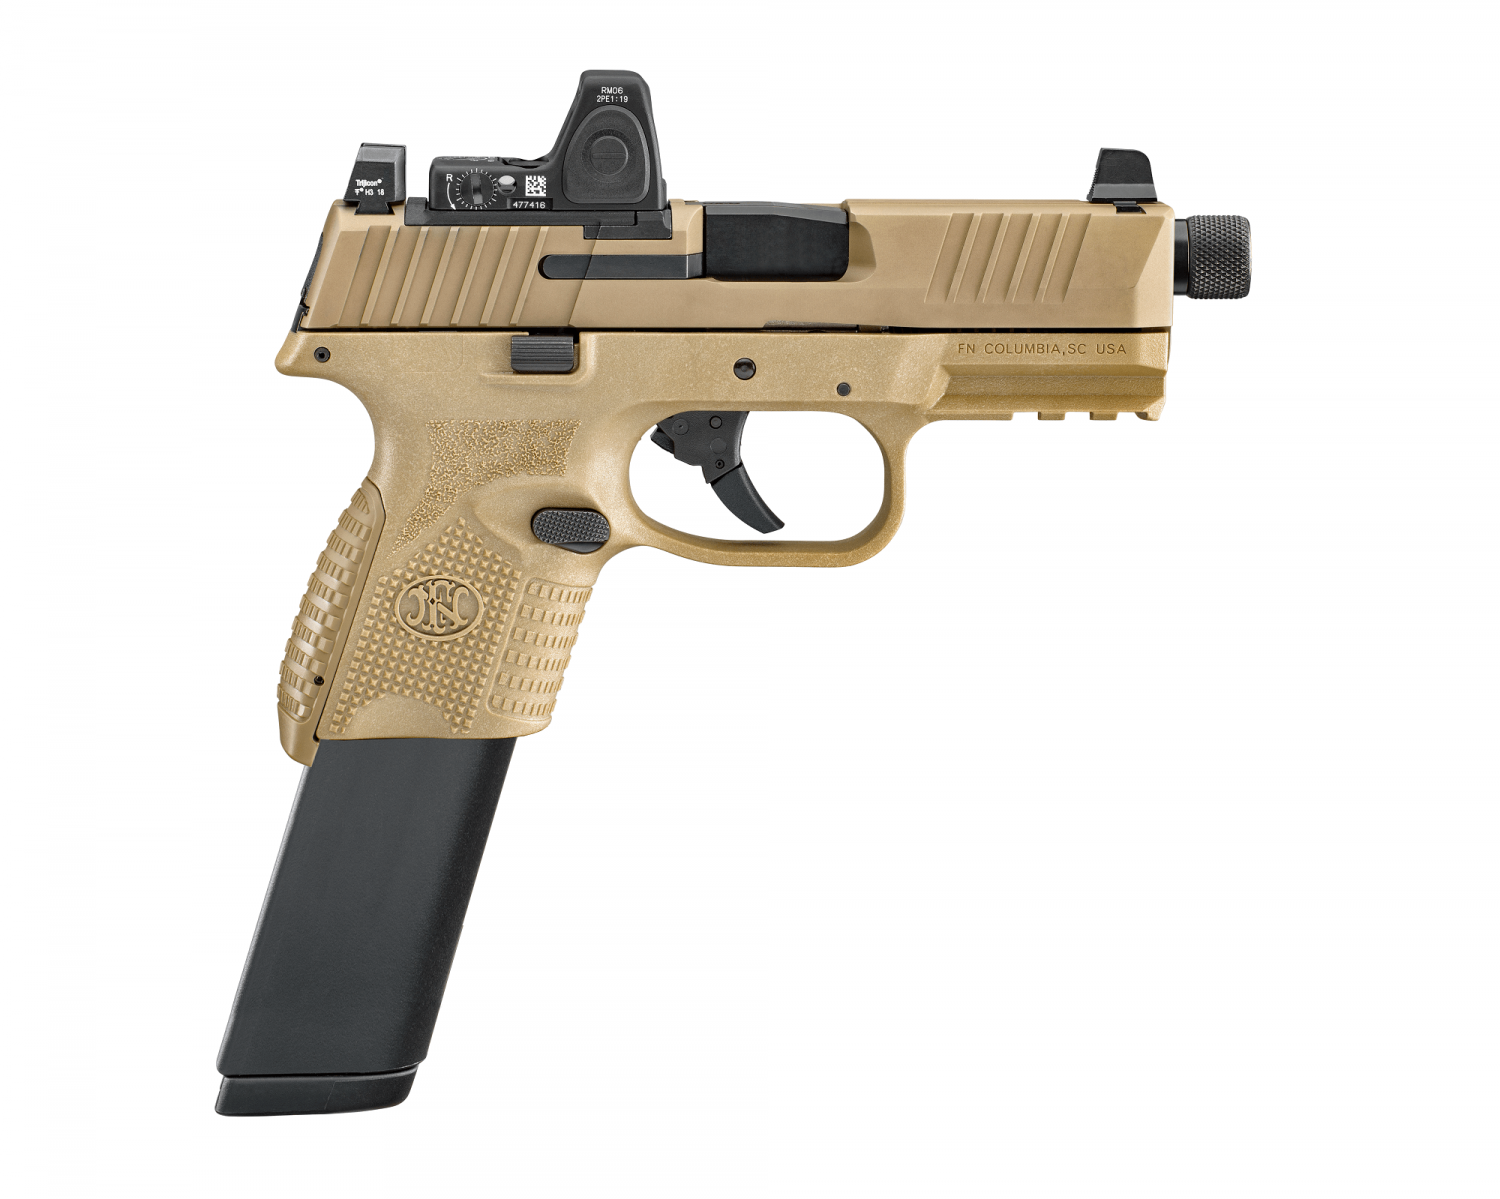 Optics And Suppressor Ready! New FN 509 Compact Tactical Pistol